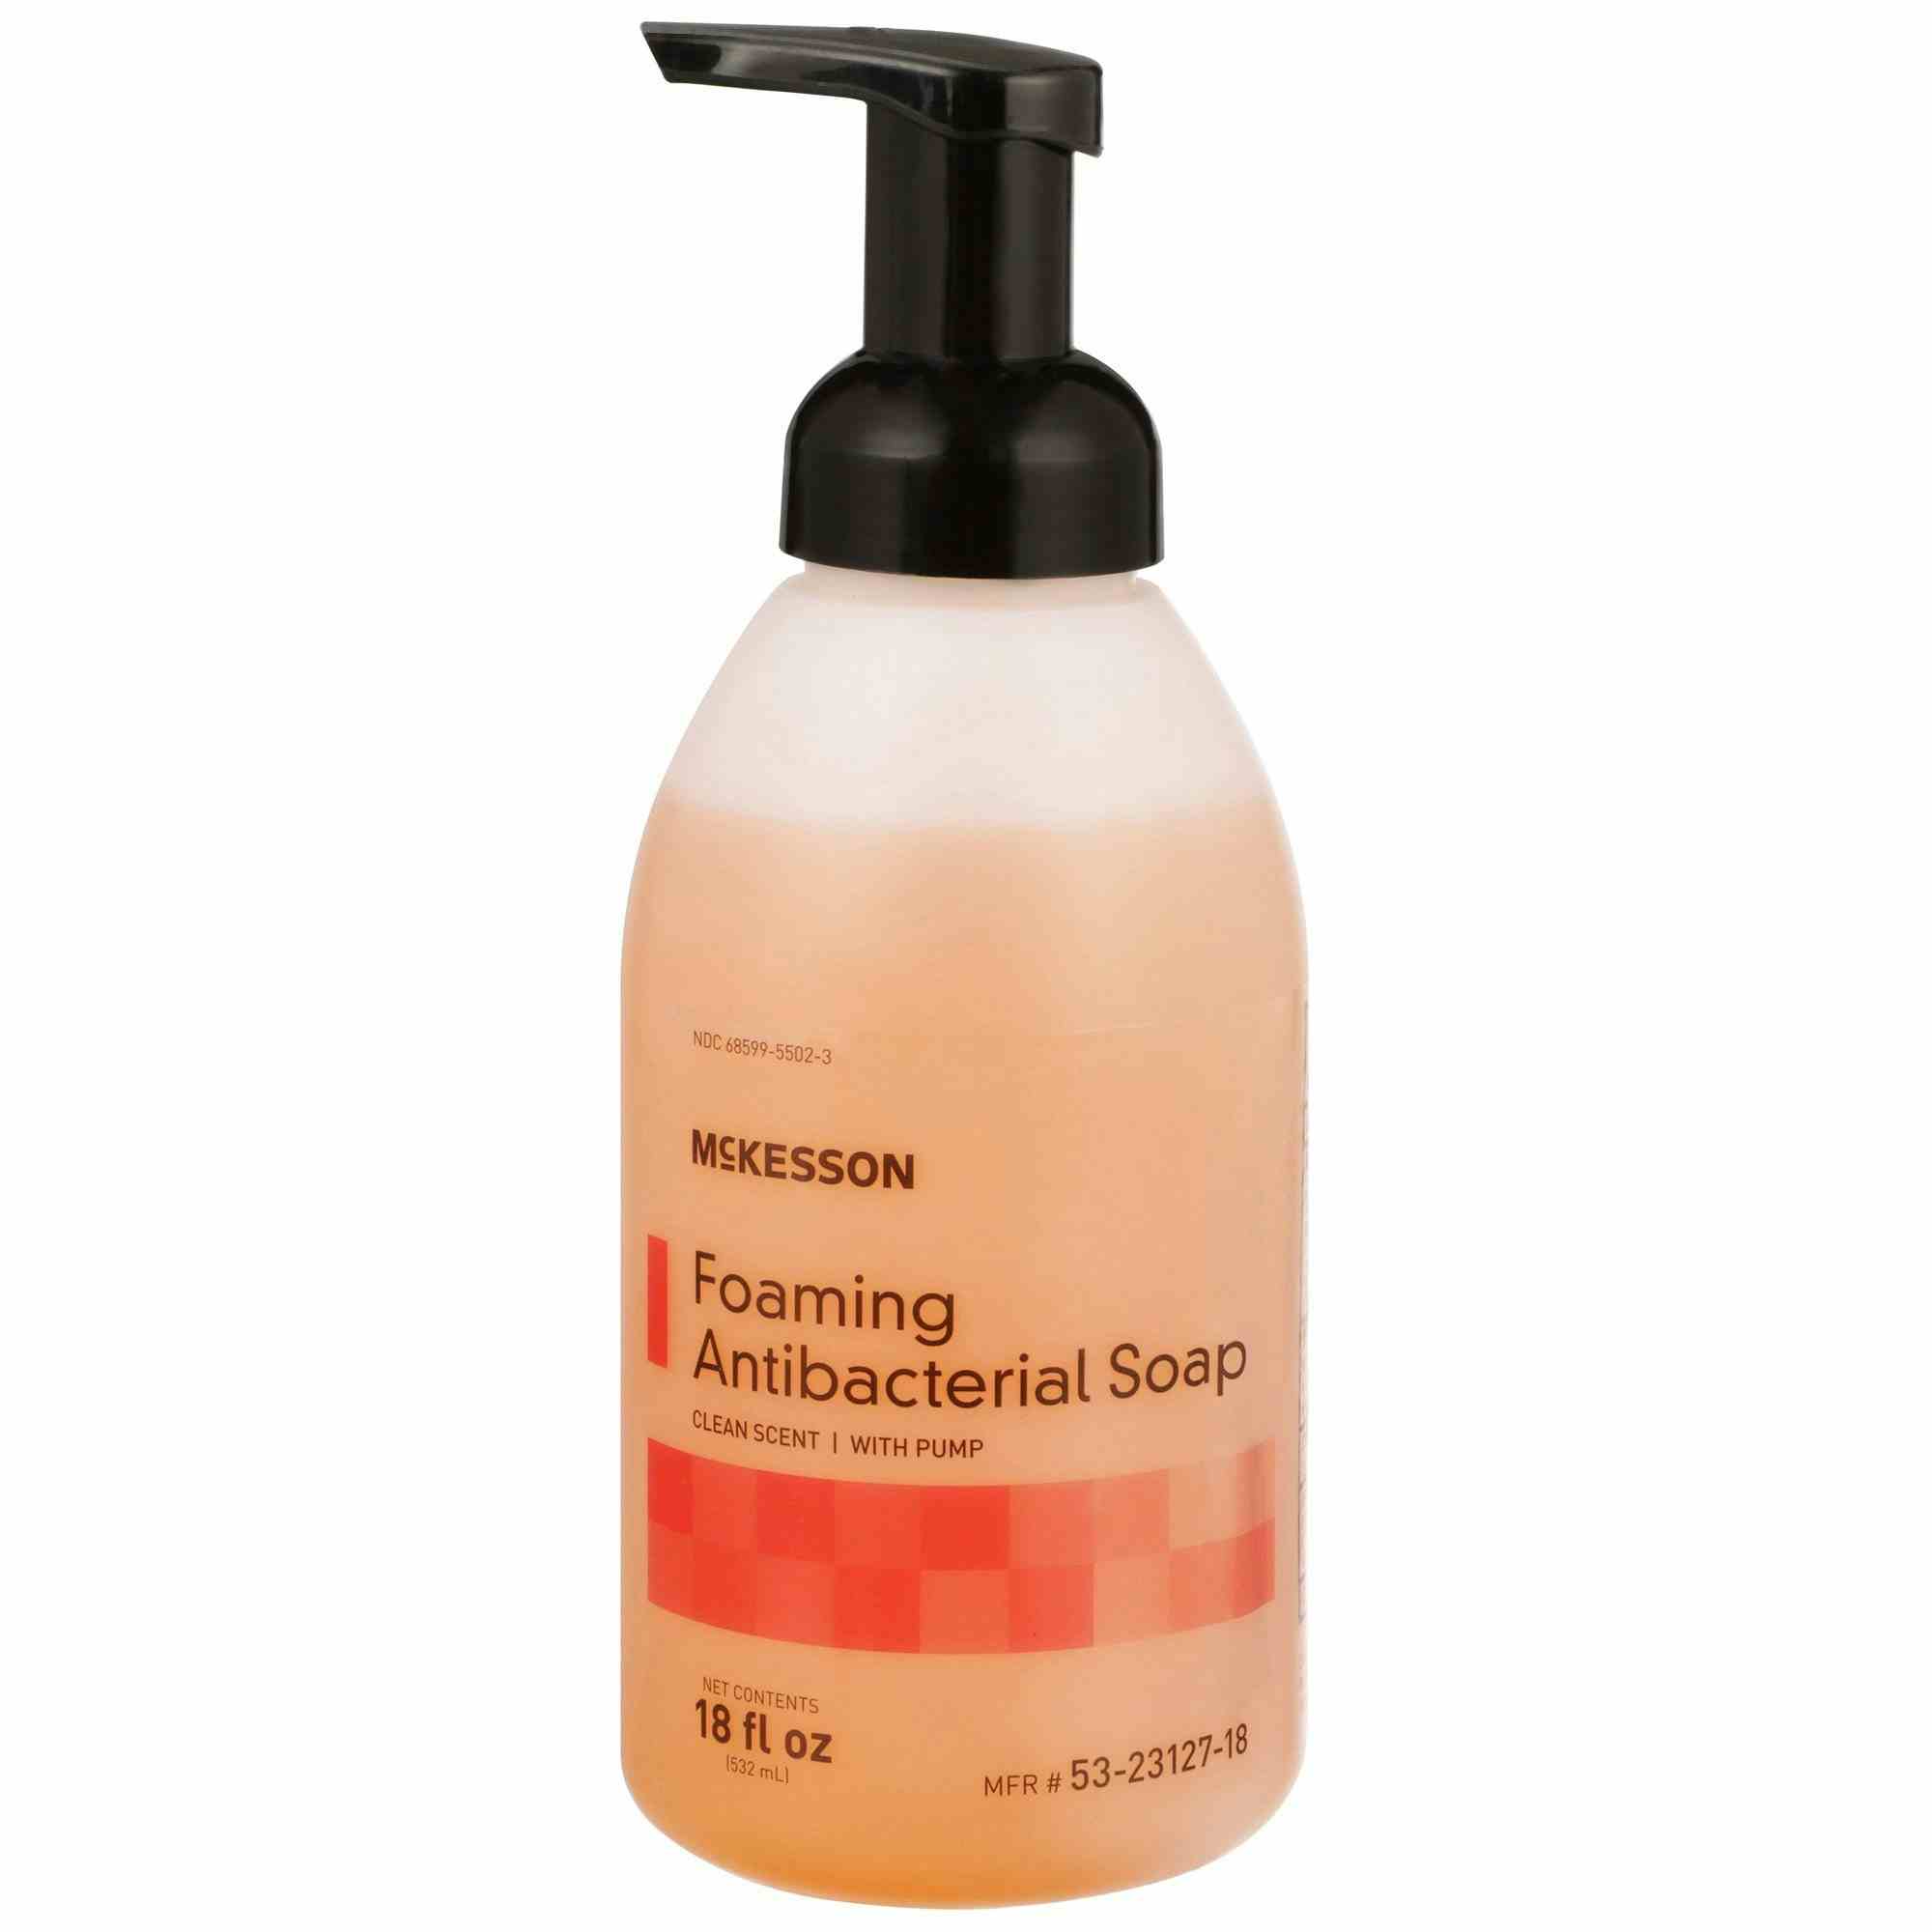 McKesson Foaming Antibacterial Soap, Clean Scent, 53-23127-18, 18 oz. - 1 Each